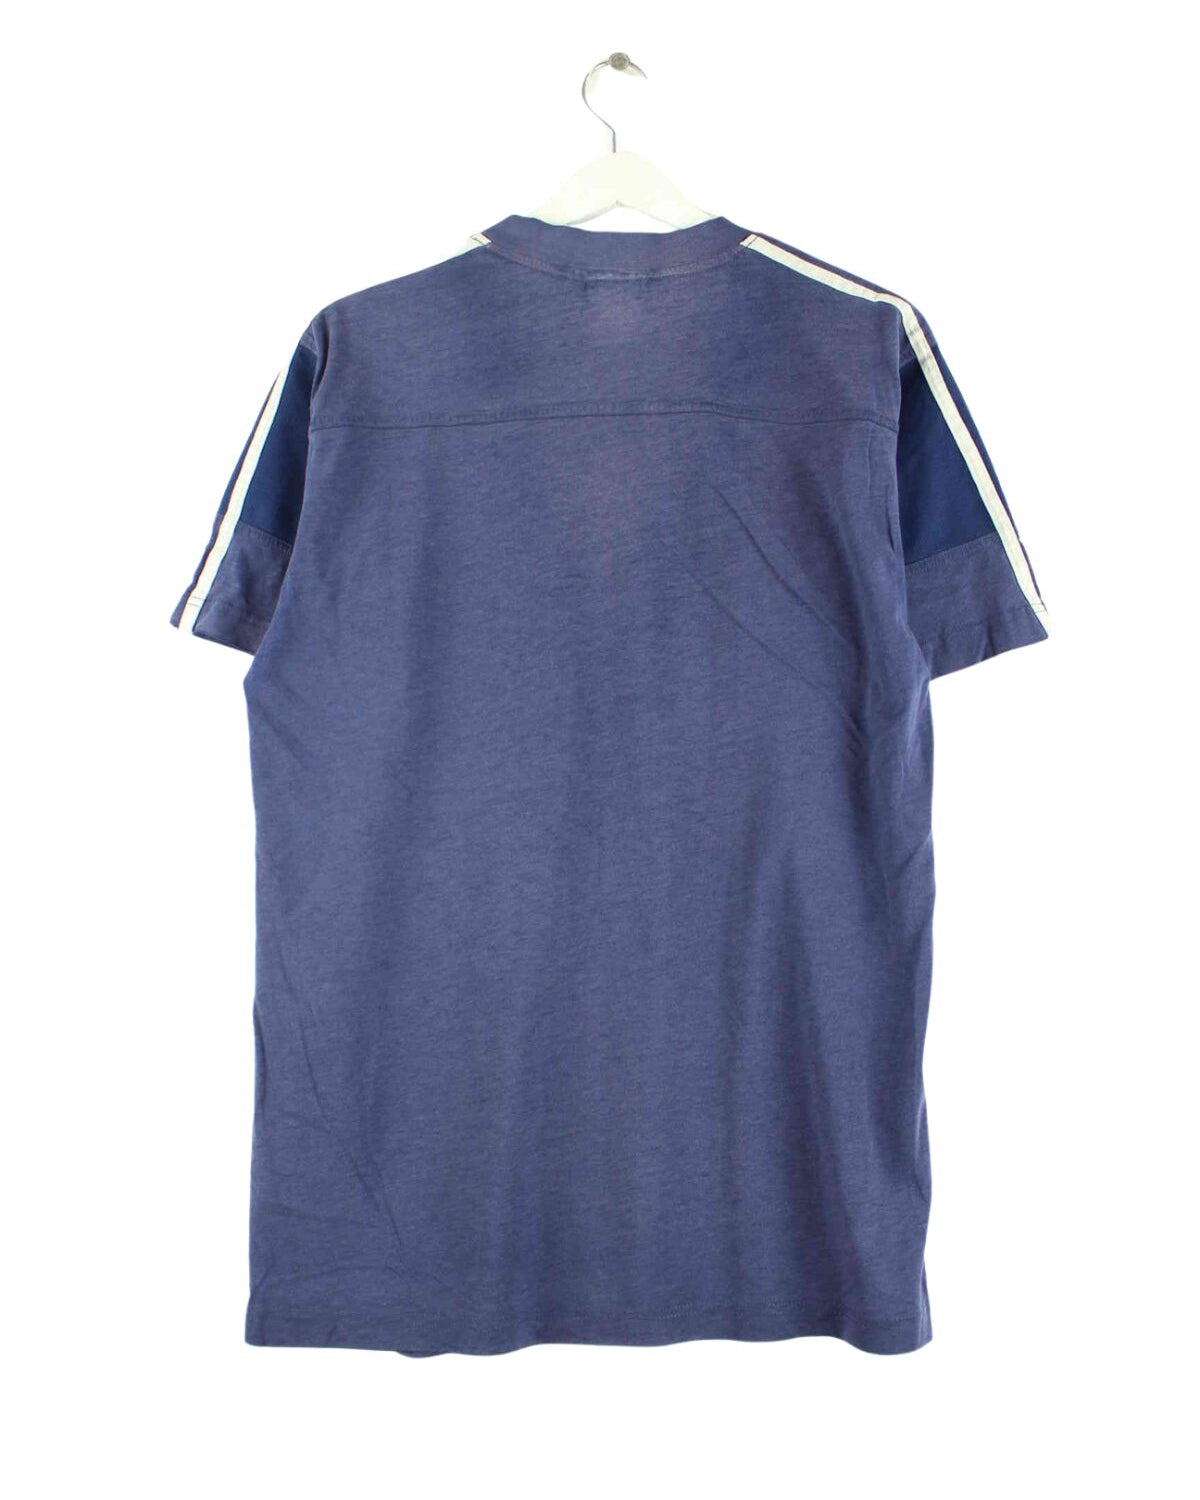 Adidas 90s Vintage Basic T-Shirt Blau L (back image)